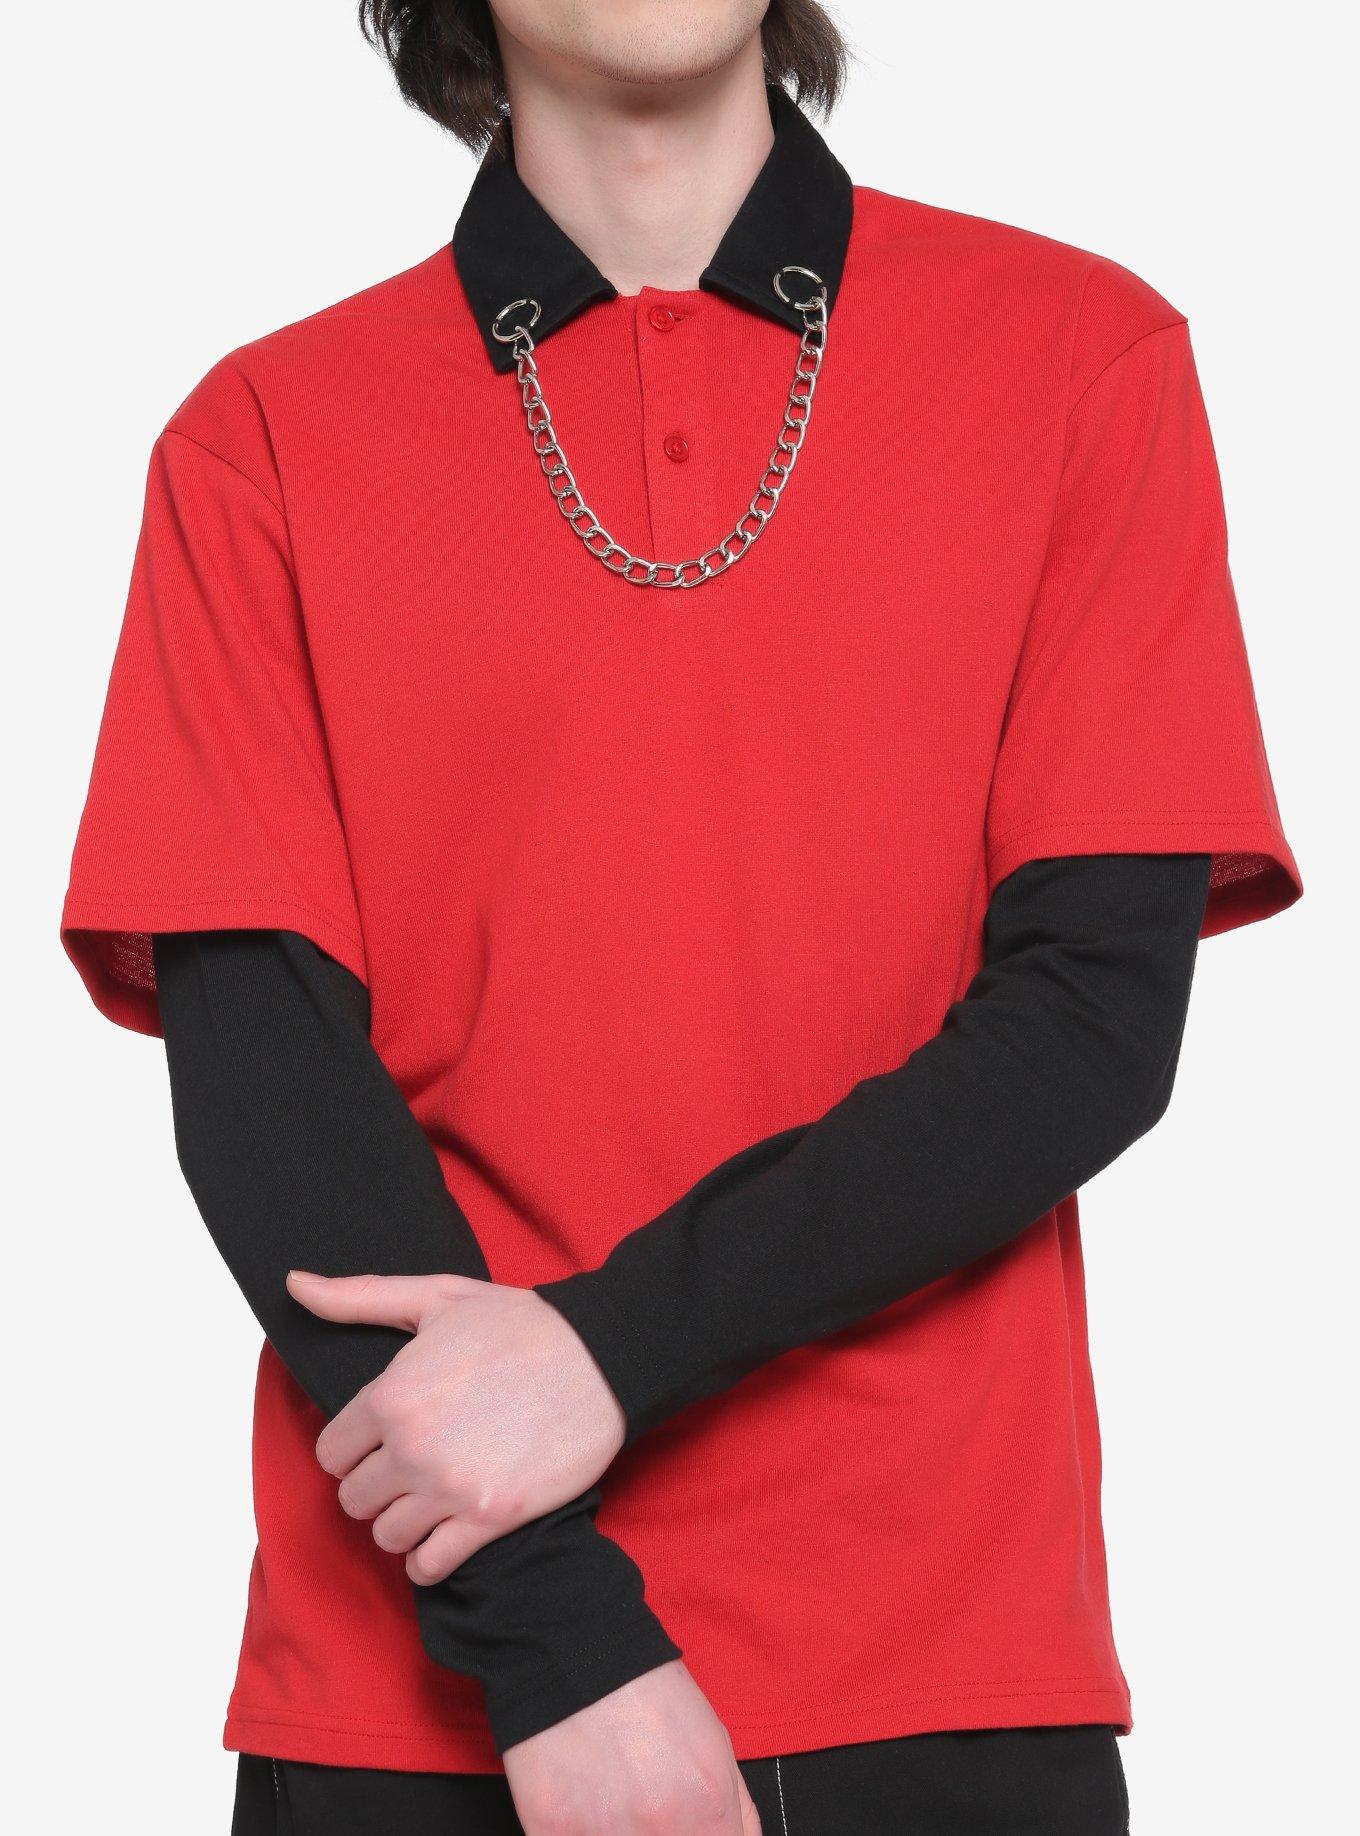 Red & Black Chain Collar Twofer Long-Sleeve Shirt, BLACK  RED, hi-res